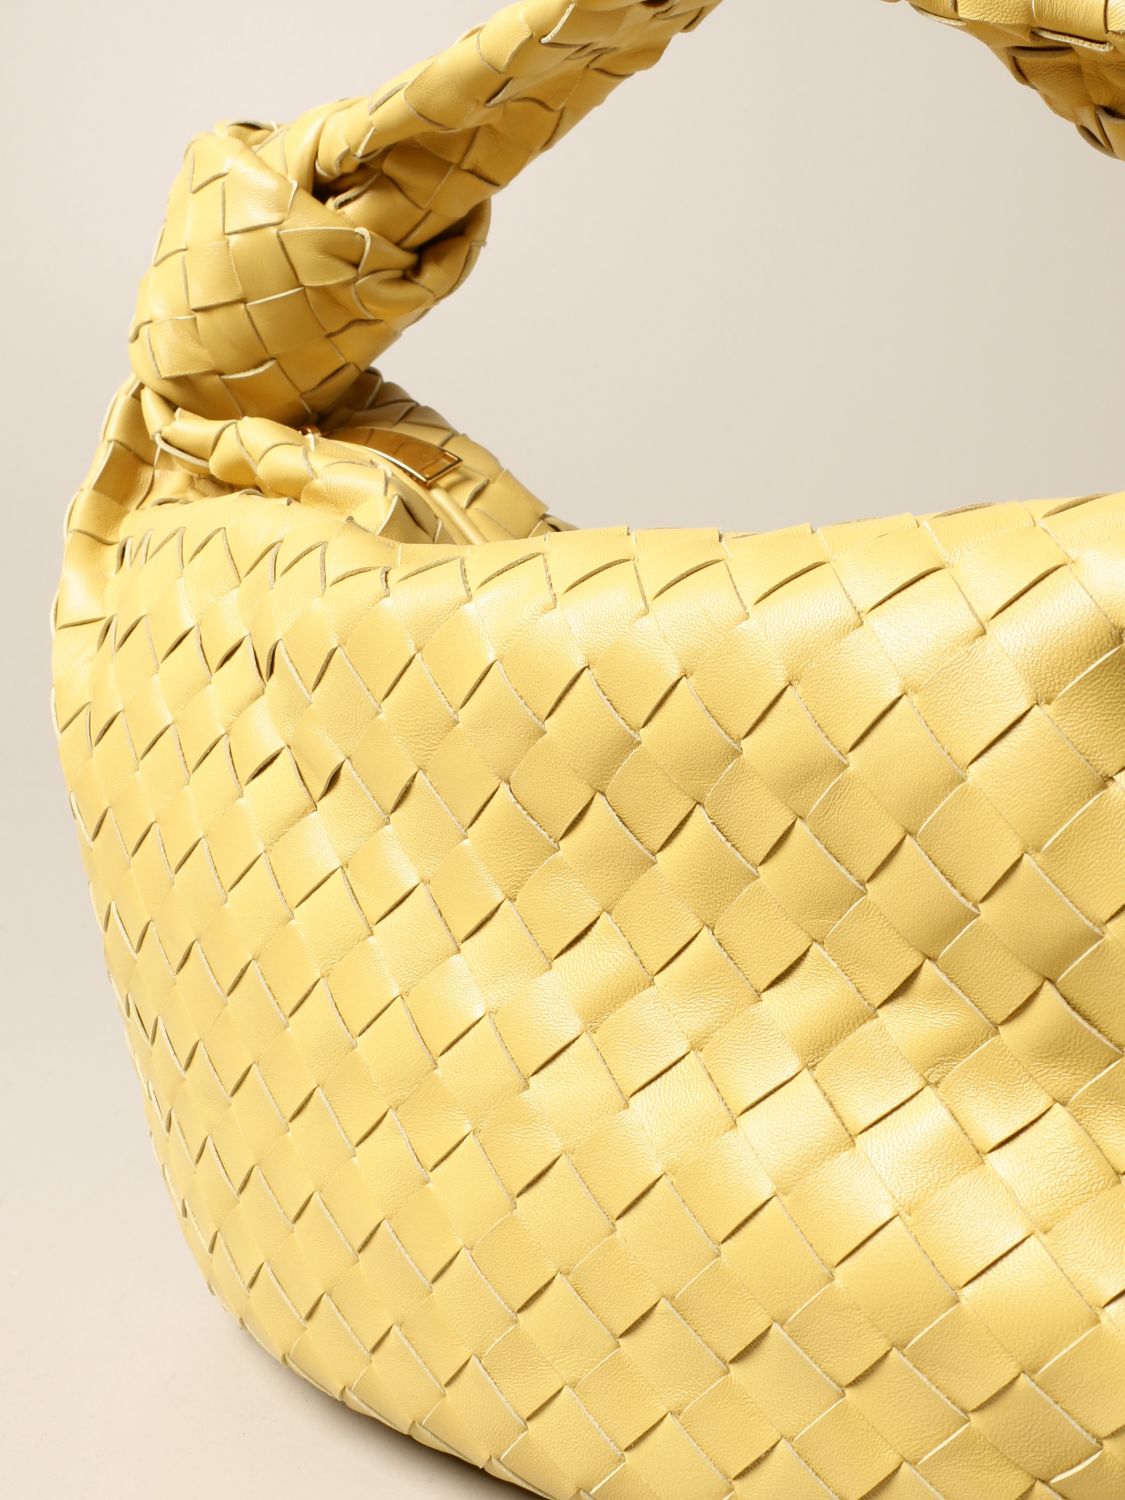 BOTTEGA VENETA: Jodie hobo bag in woven leather - Gold | Shoulder Bag ...